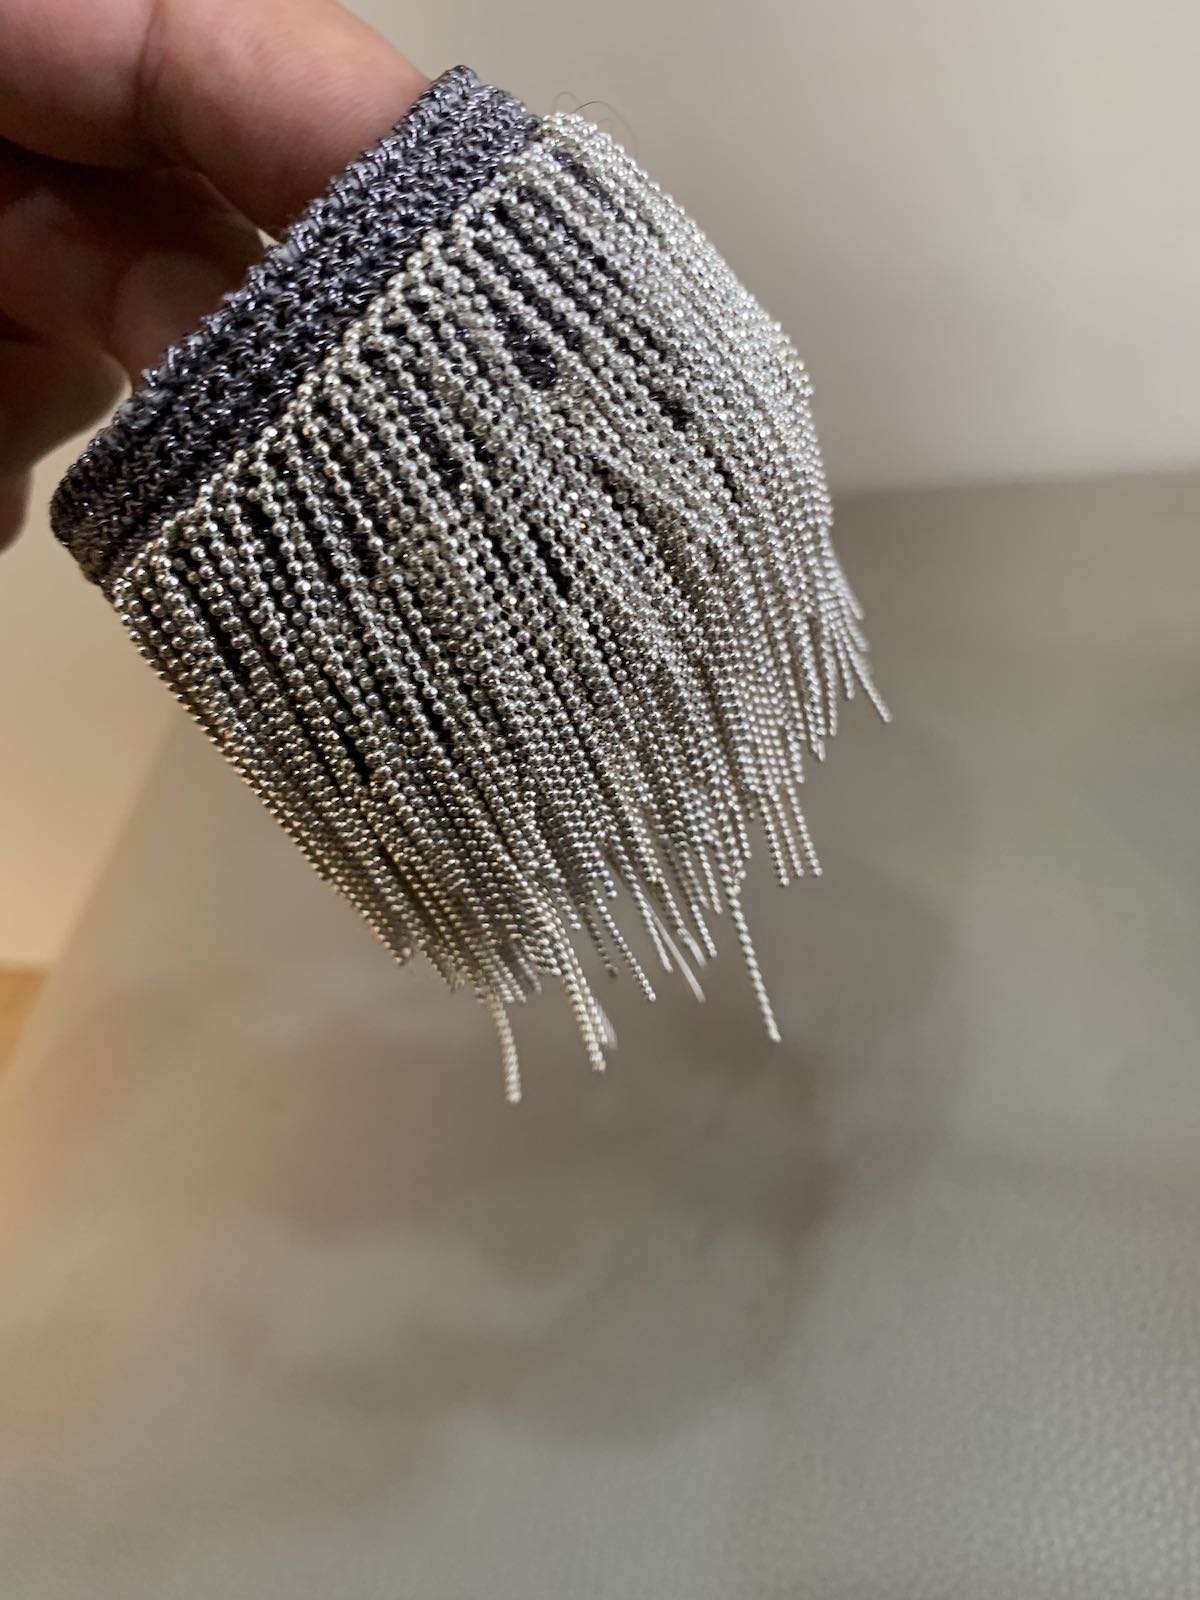 Bracciale elastico con fili in argento - AgeVintage